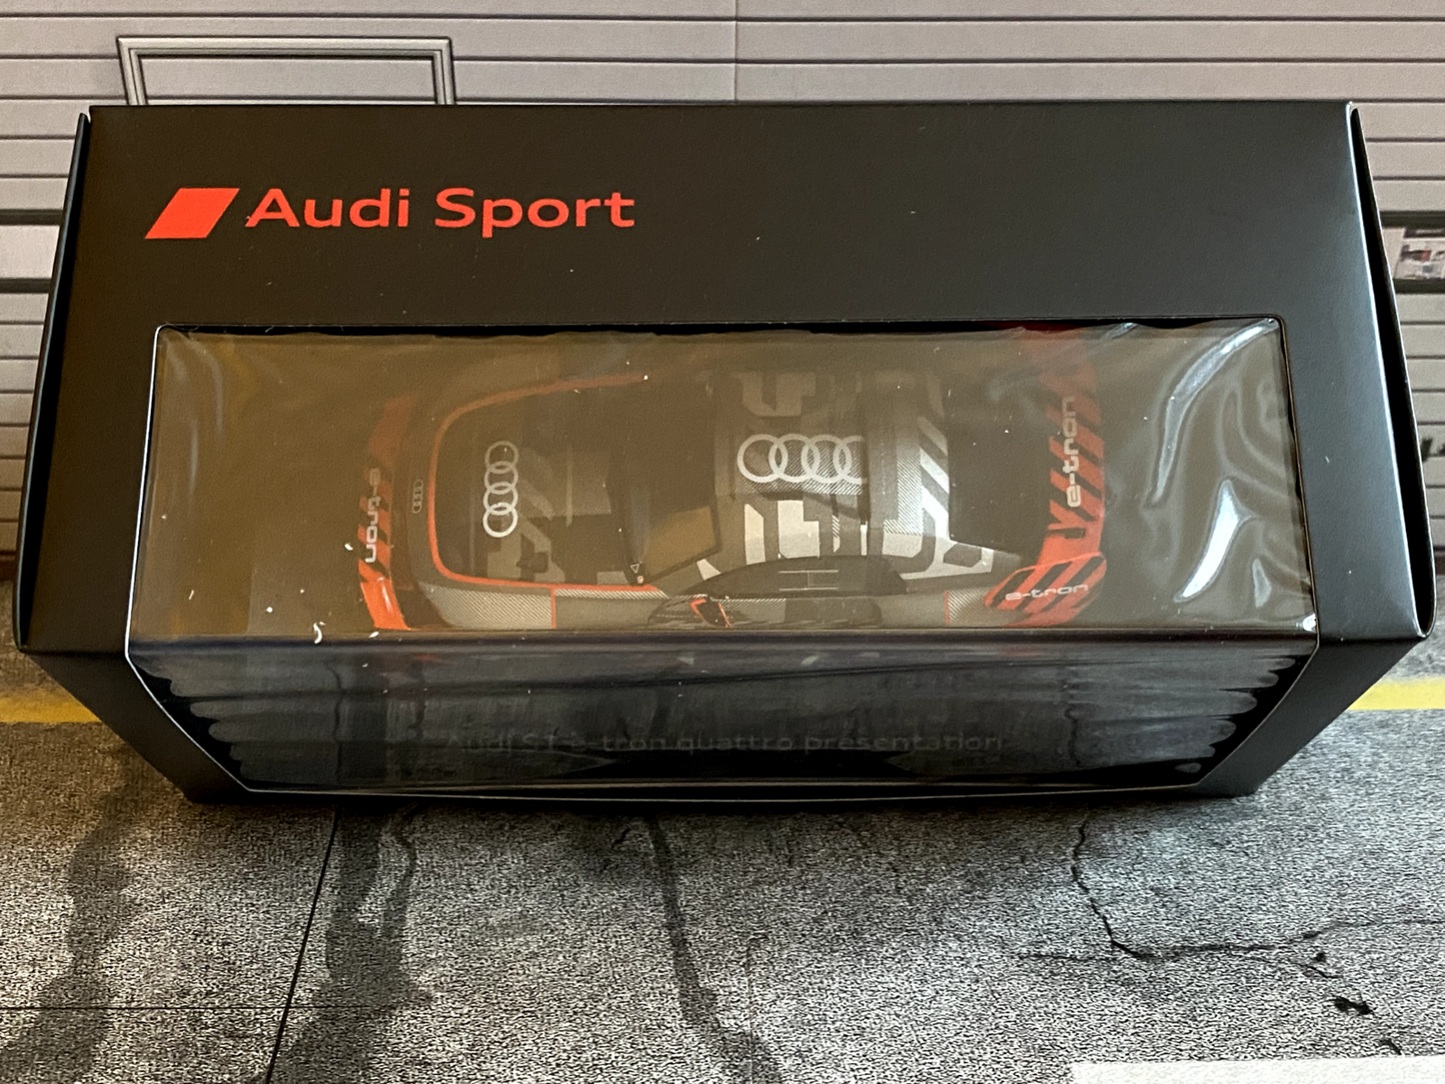 Audi S1 Quattro E-Tron Präsentation Audi Sport Collection Neu in OVP new 1:43